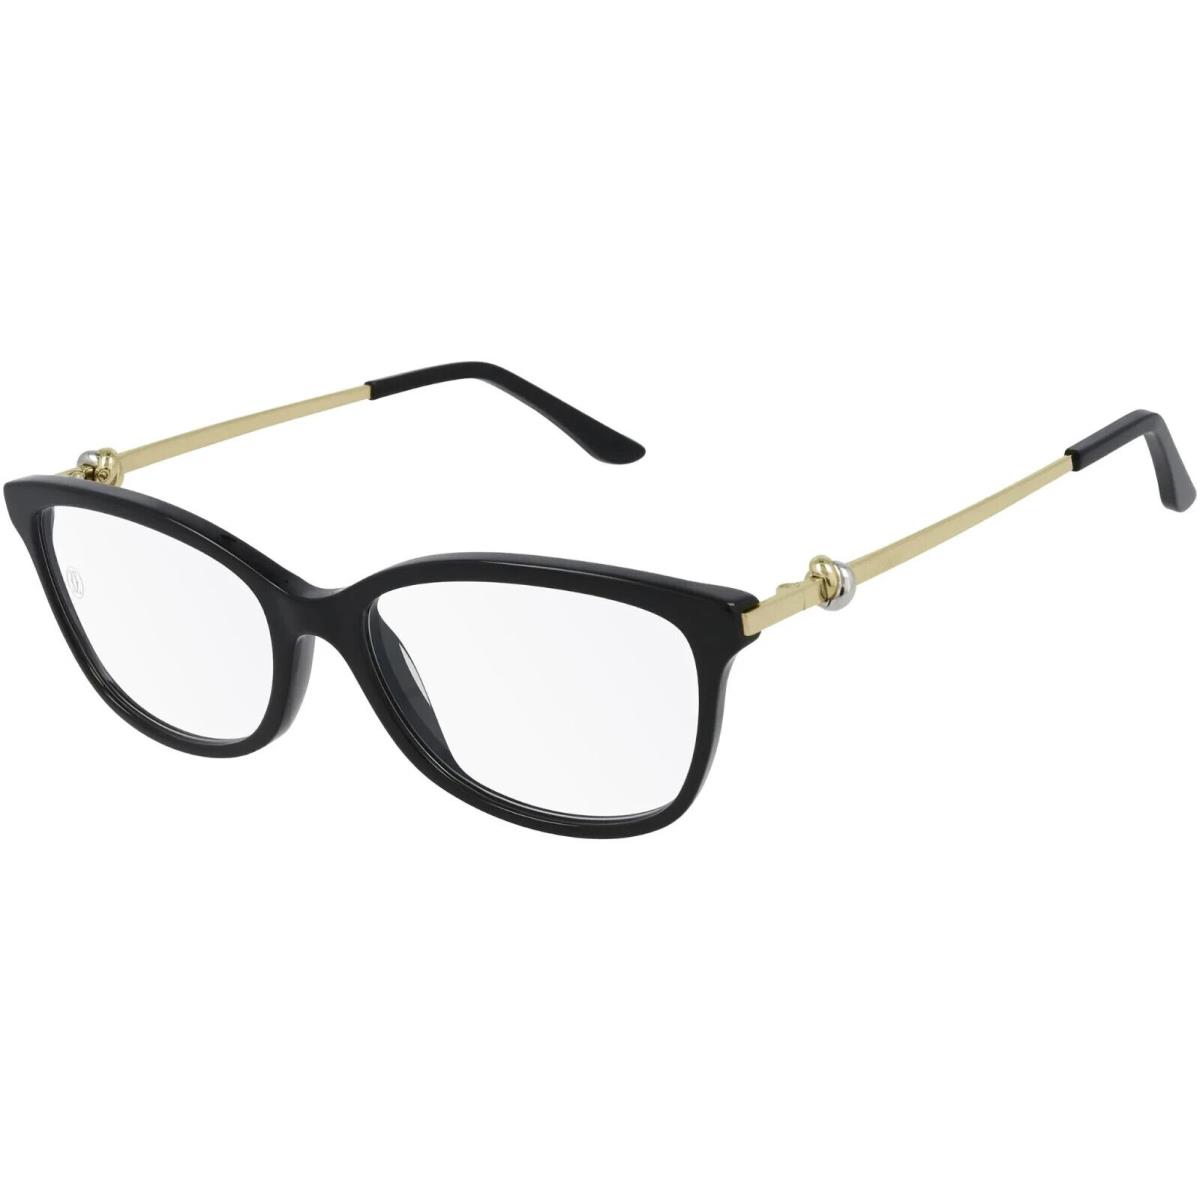 Cartier Rectangle Eyeglasses CT0257o-004 Trinity Black Gold Frame Clear Lenses